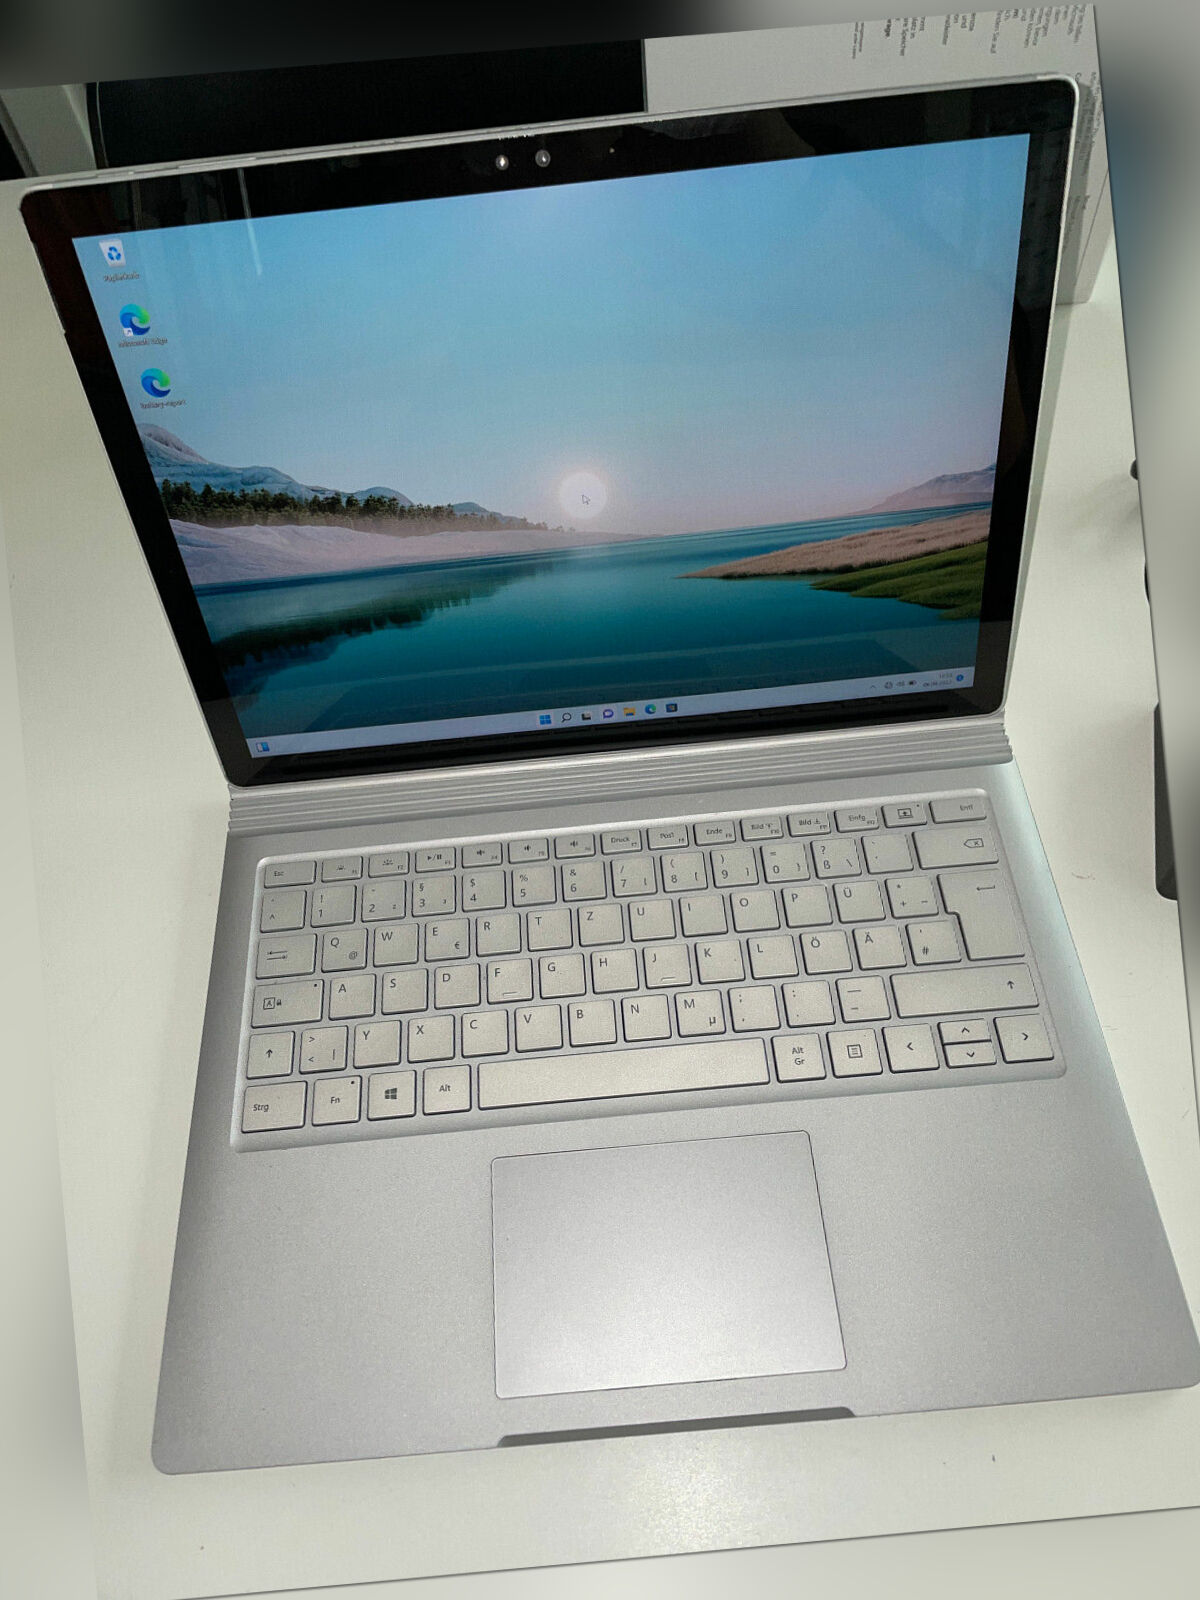 ### Microsoft Surface Book (Laptop!), i7, 512GB SSD 16GB, Windows 11 ###